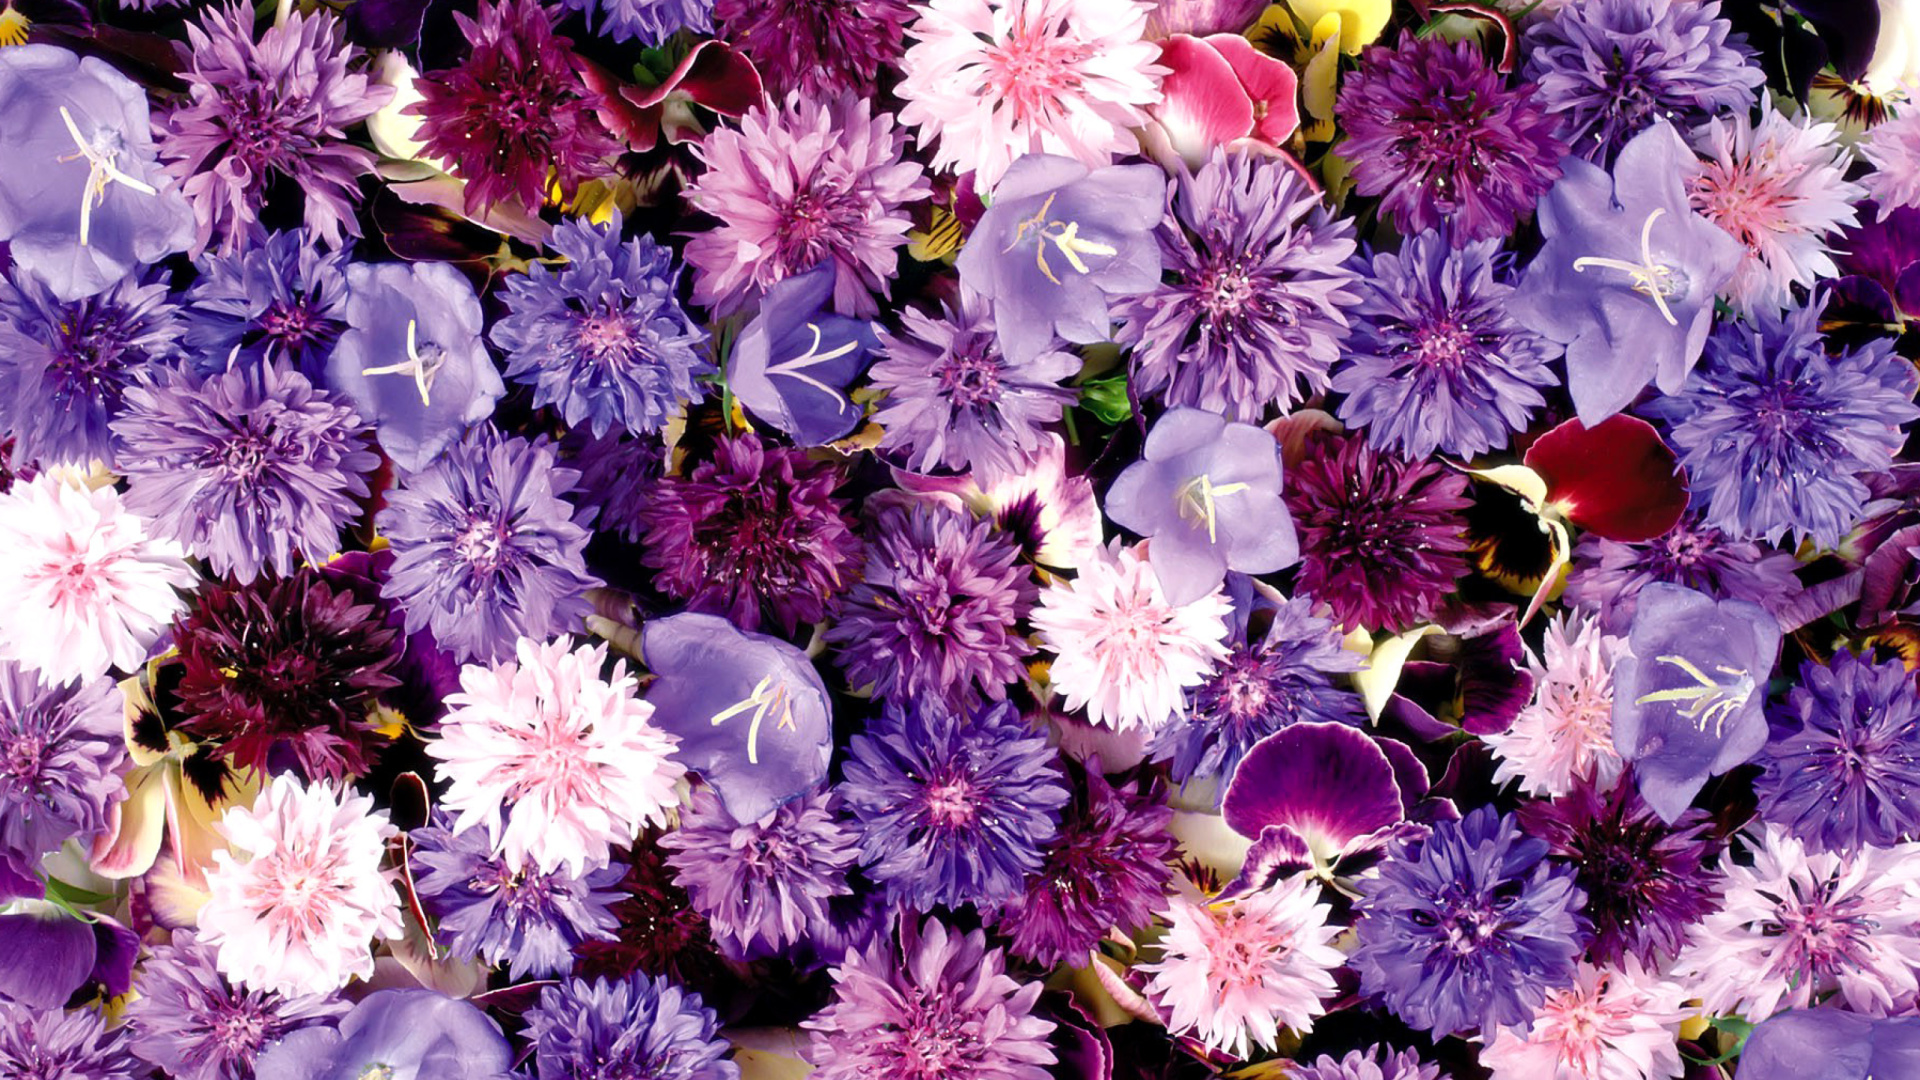 Flower carpet from cornflowers, bluebells, violets wallpaper 1920x1080